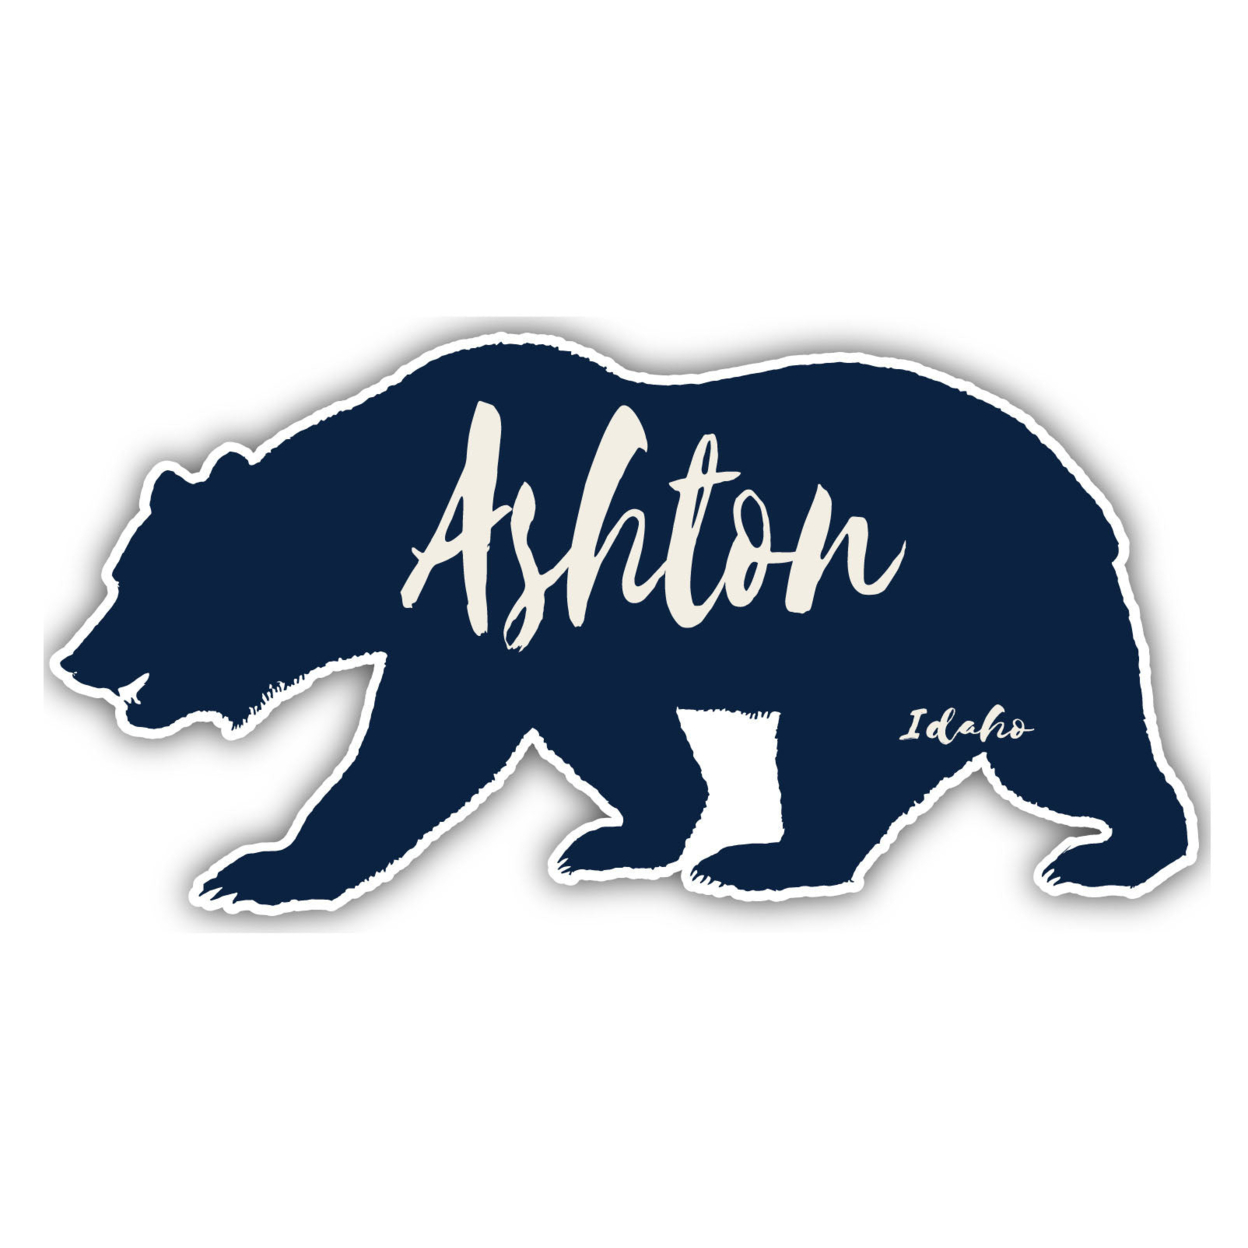 Ashton Idaho Souvenir Decorative Stickers (Choose Theme And Size) - Single Unit, 4-Inch, Tent